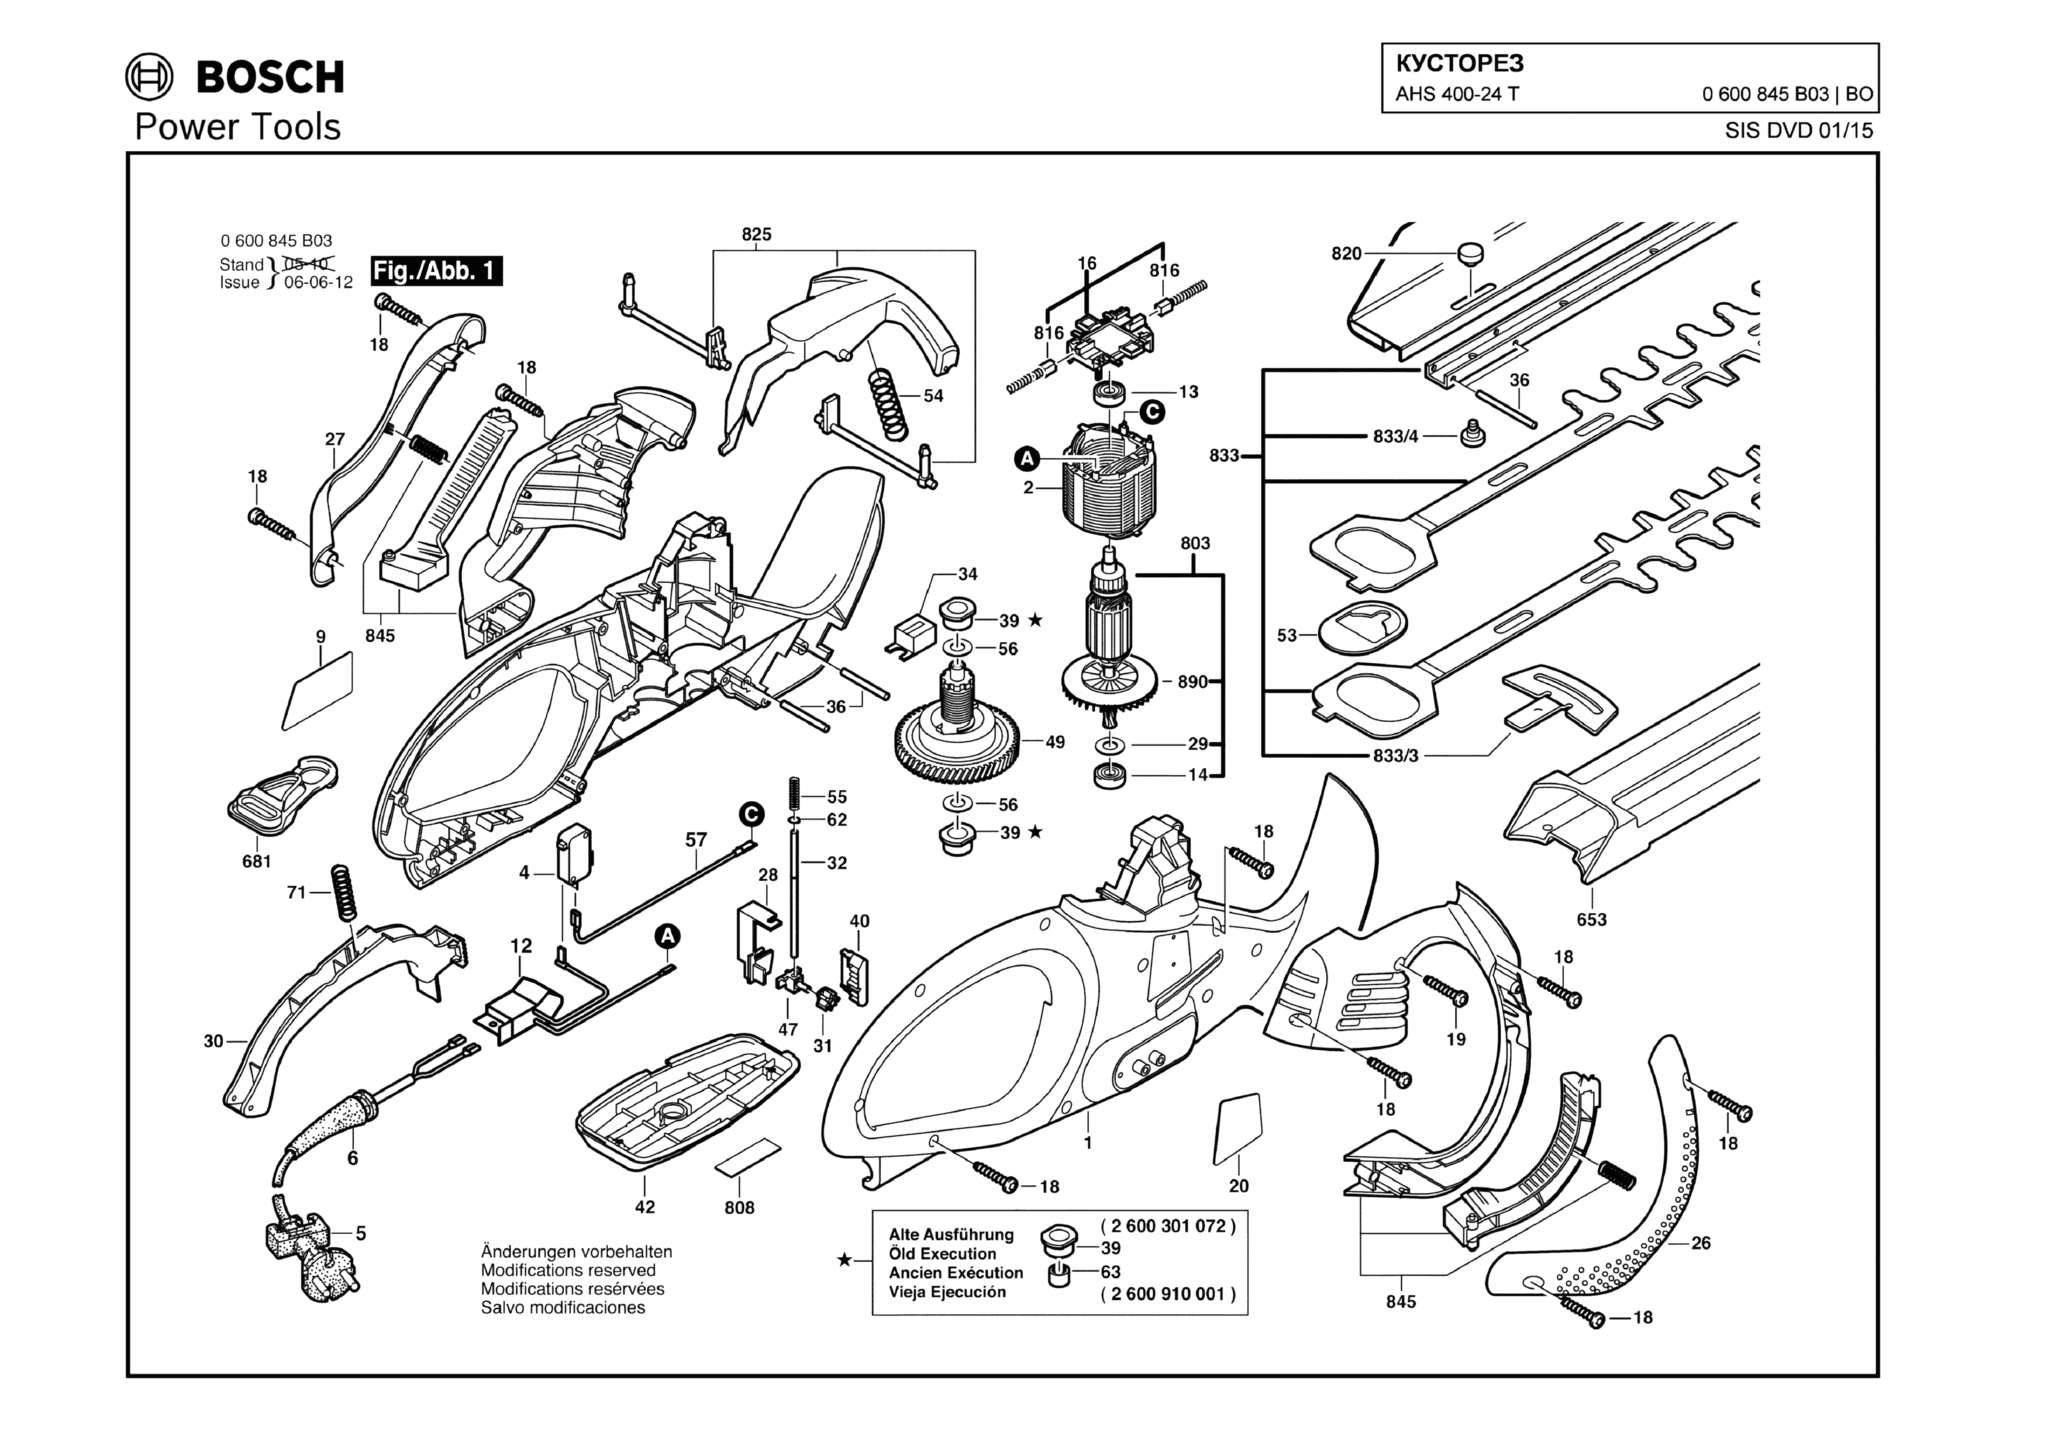 Запчасти, схема и деталировка Bosch AHS 400-24 T (ТИП 0600845B03)